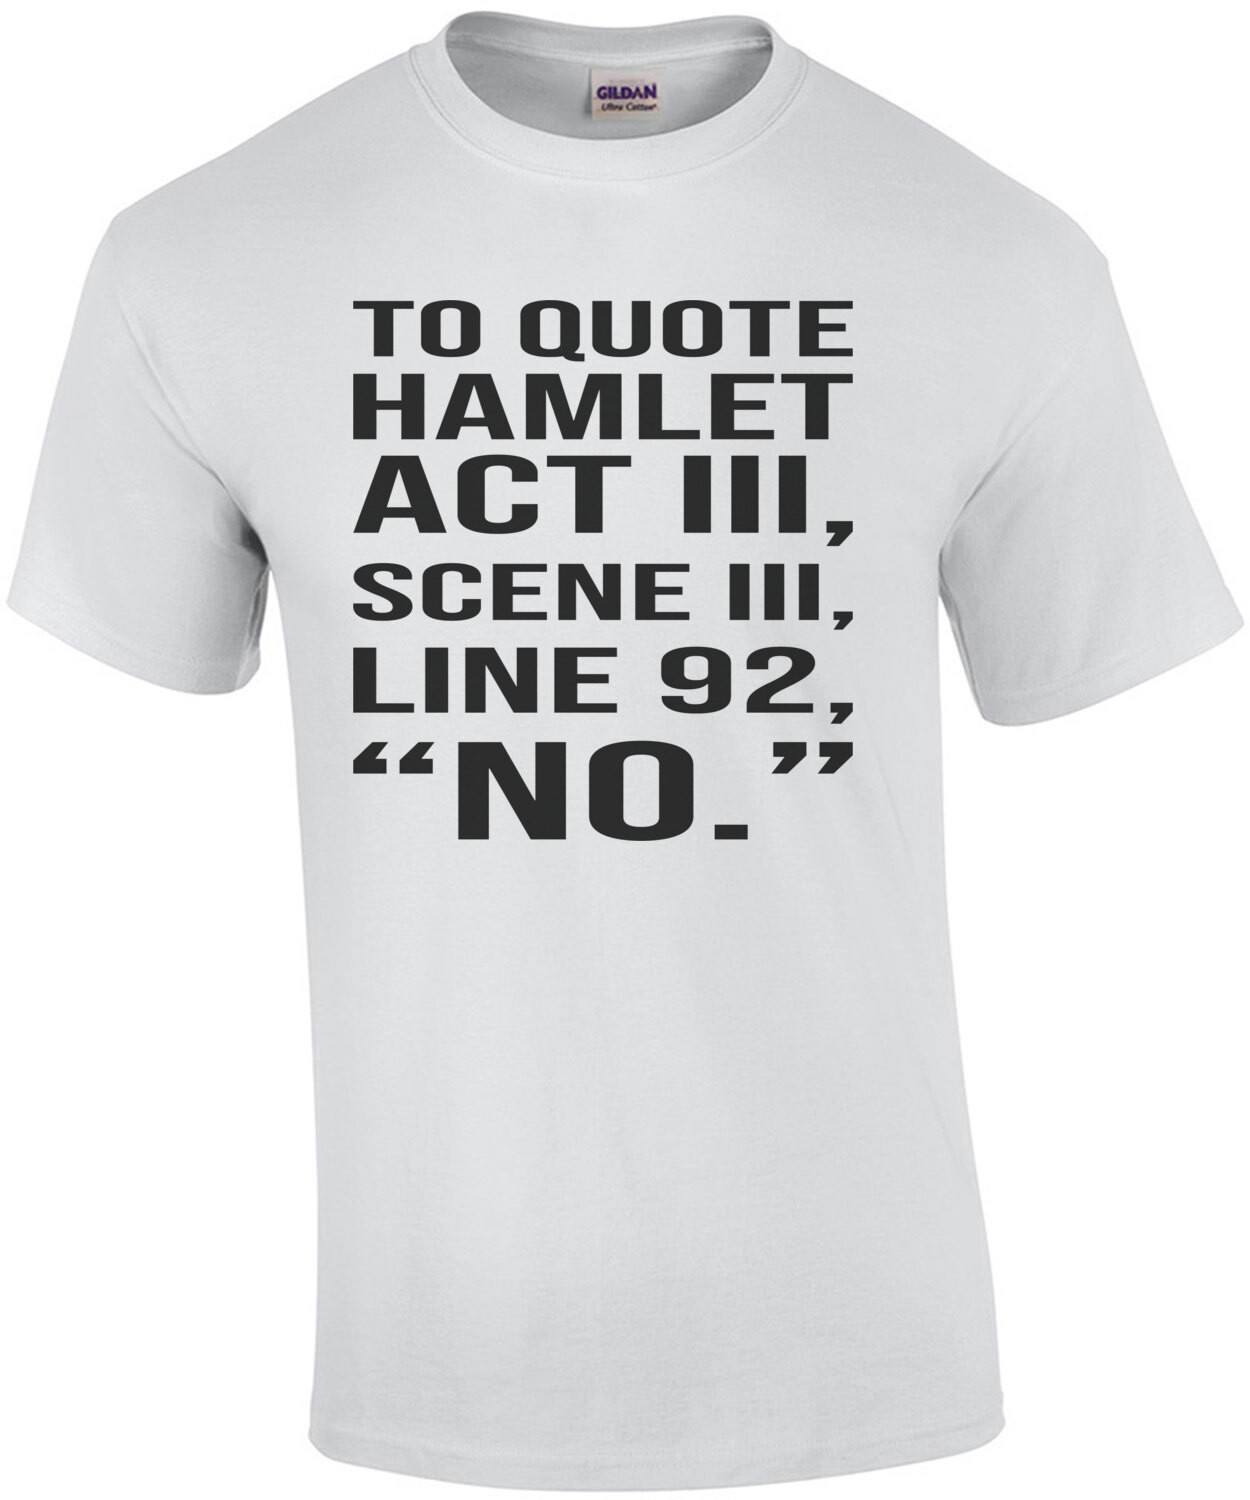 To quote hamlet act III, Scene III, Line 92, " NO." Funny Hamlet - William Shakespeare T-Shirt